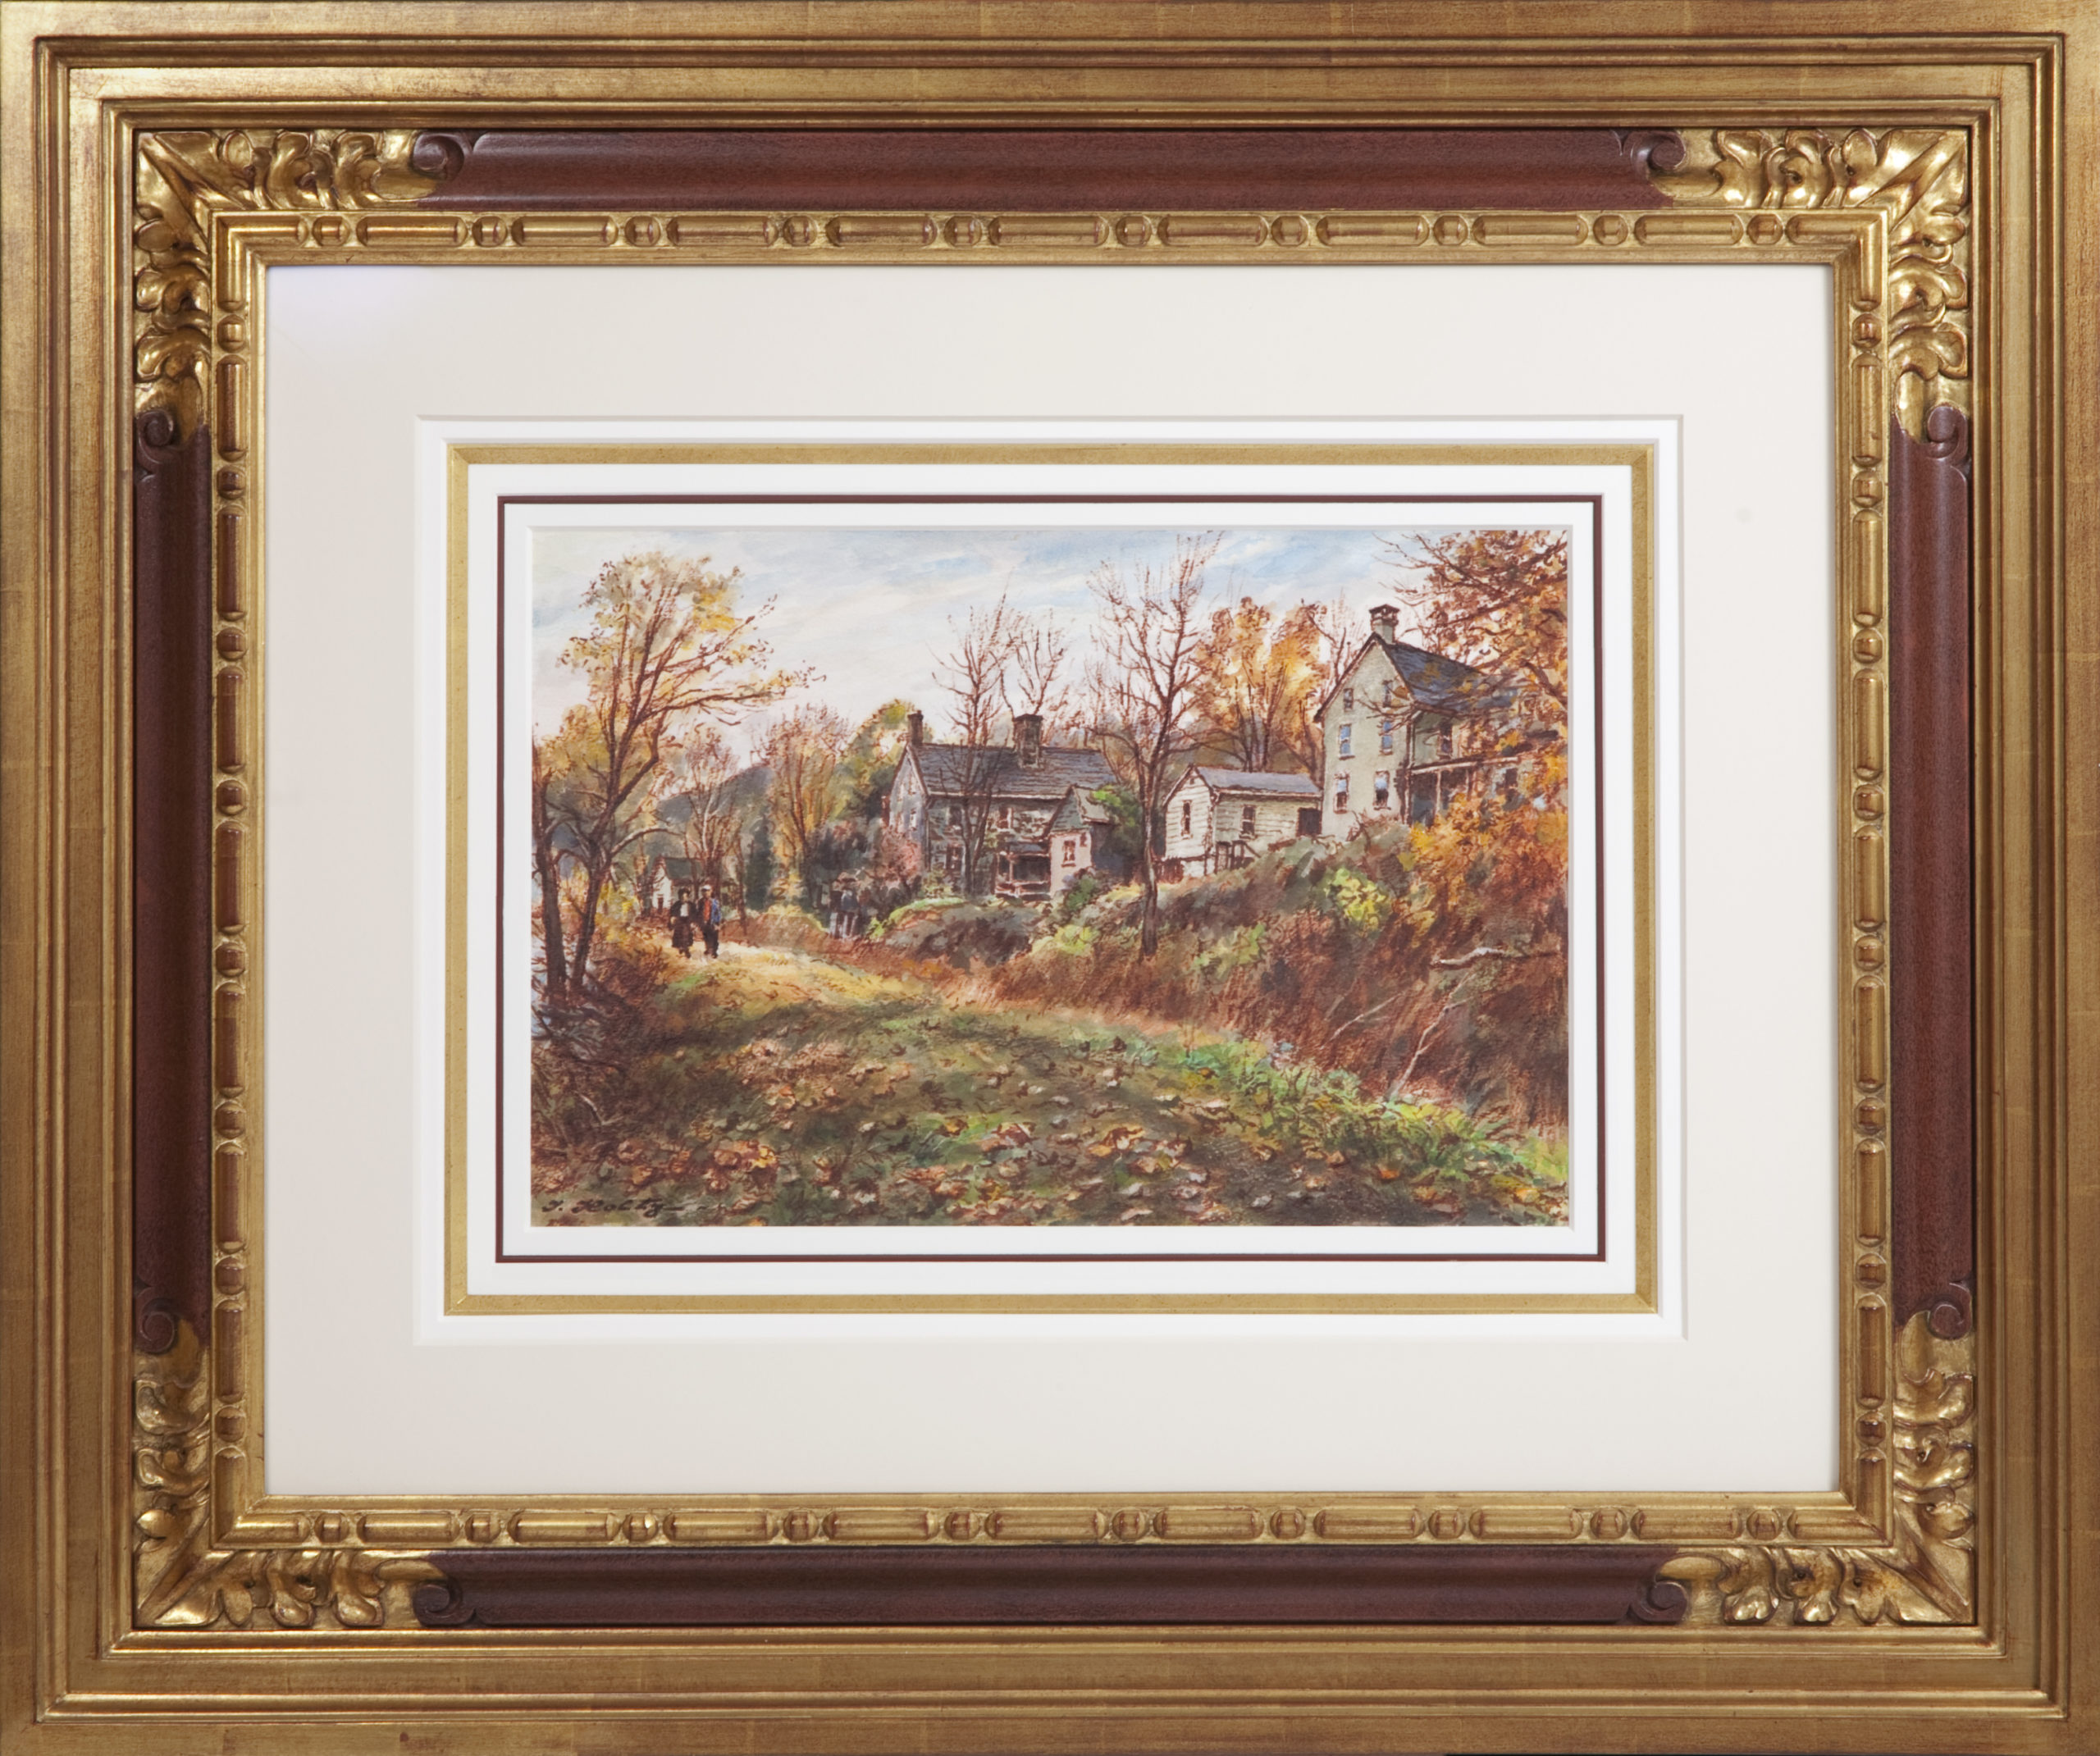 053 Bucks County Pennsylvania 1982 - Watercolor - 12 x 18 - Frame: 35.5 x 29.5 x 2.75